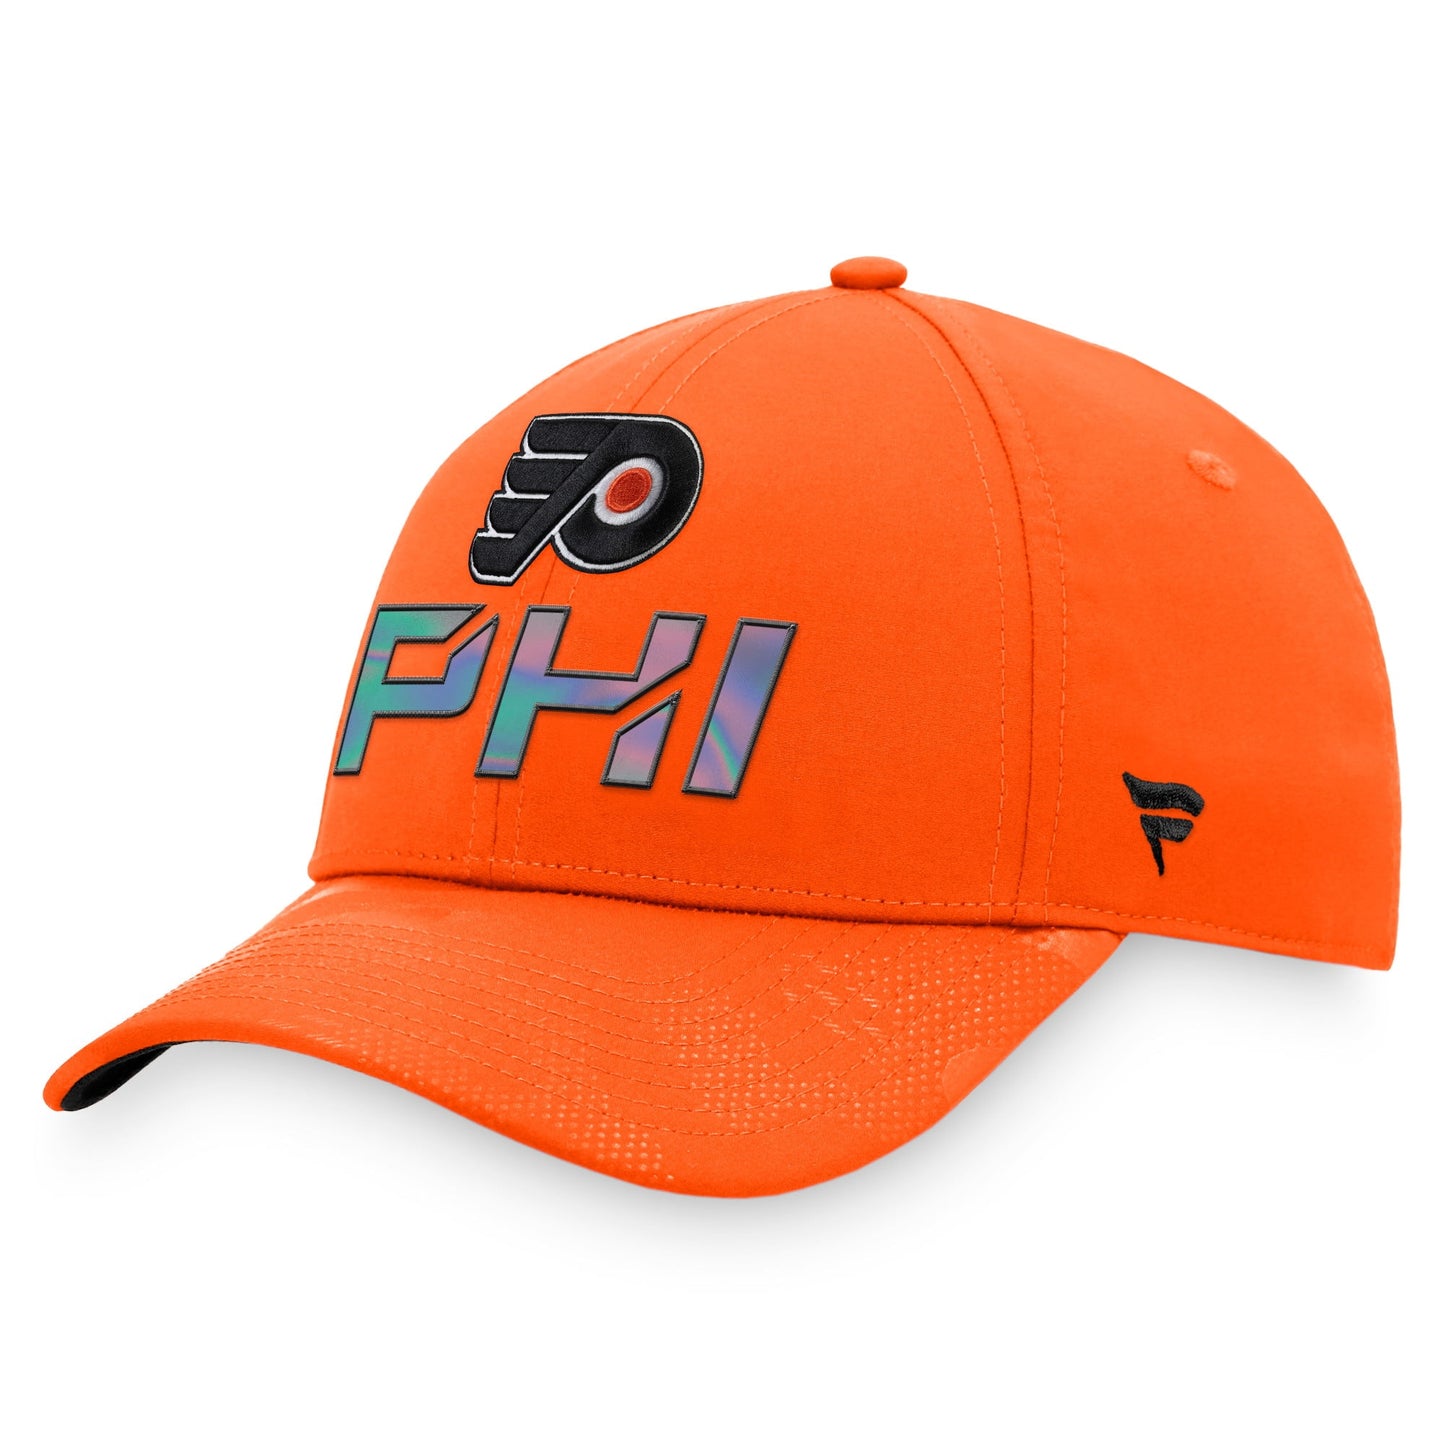 Men's Fanatics Branded Orange Philadelphia Flyers Authentic Pro Team Locker Room Adjustable Hat - OSFA